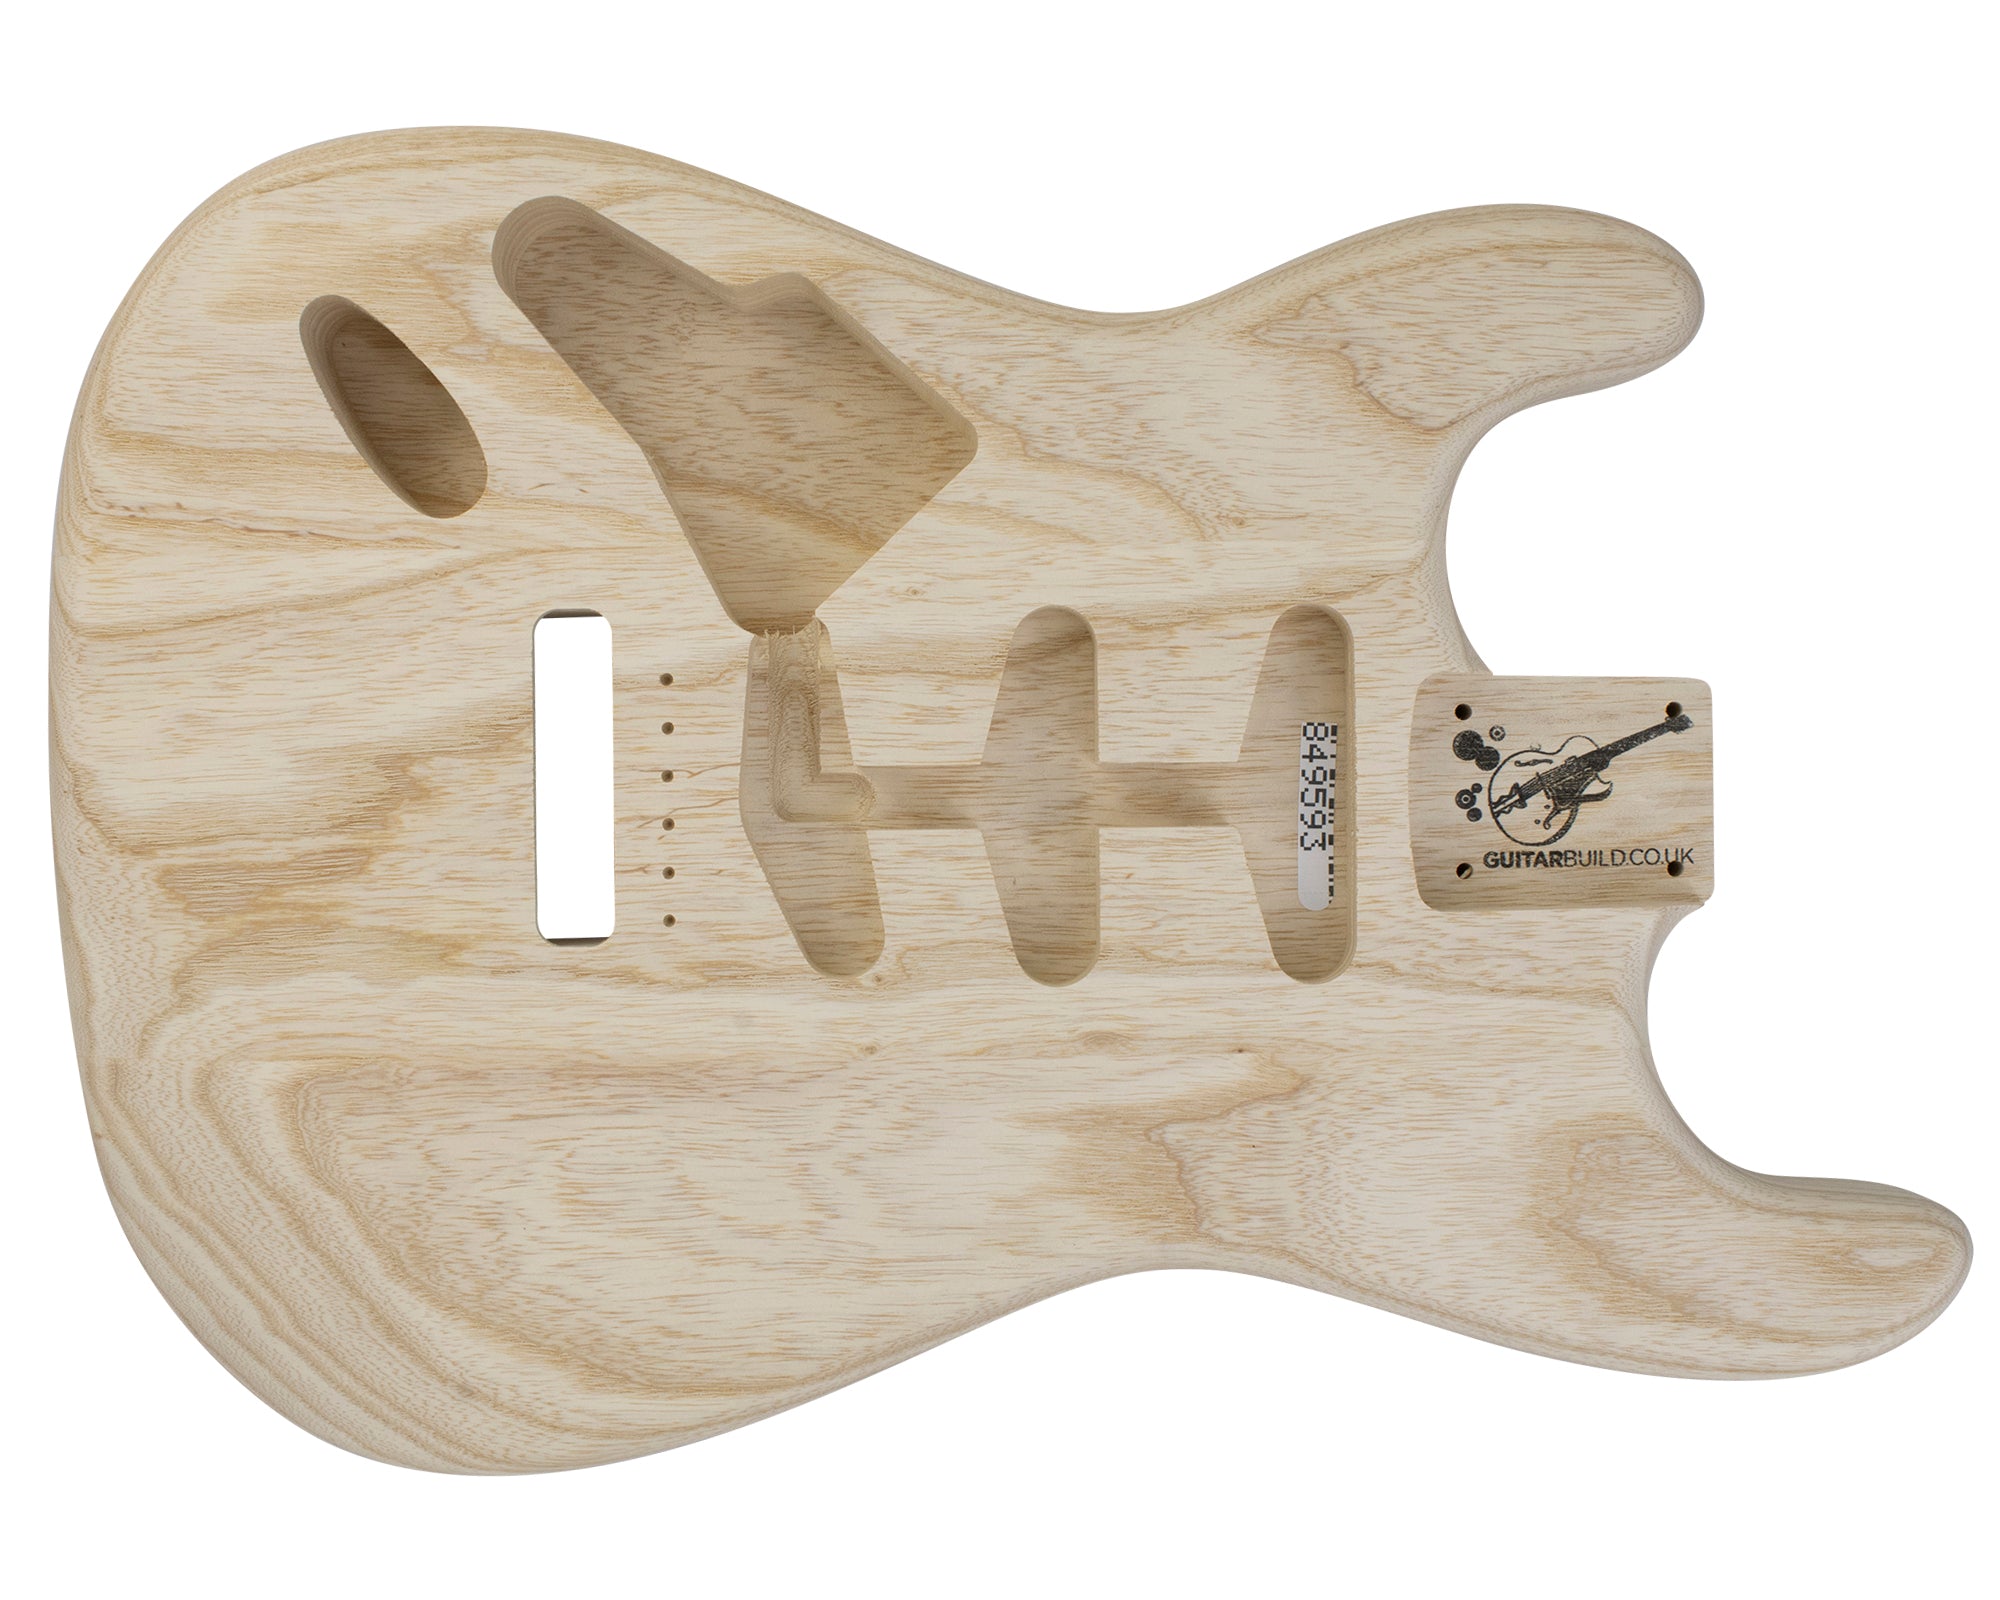 SC SSS BODY 3pc Swamp Ash 1.9 Kg - 849593-Guitar Bodies - In Stock-Guitarbuild